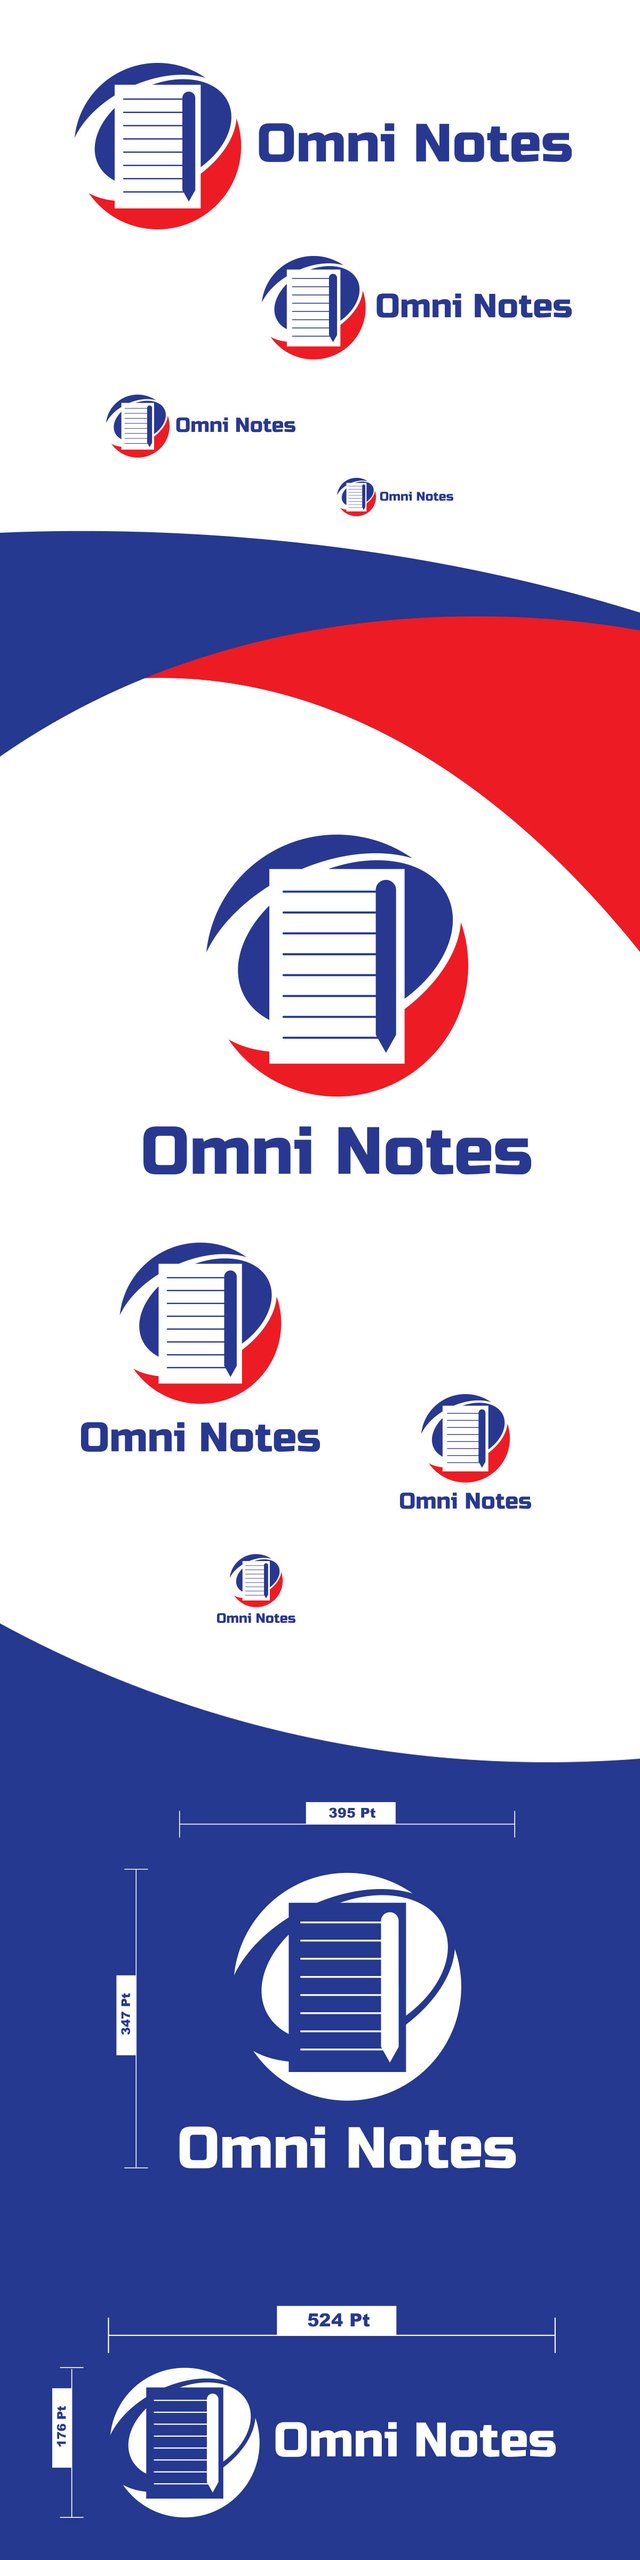 Omni-notes-3.jpg